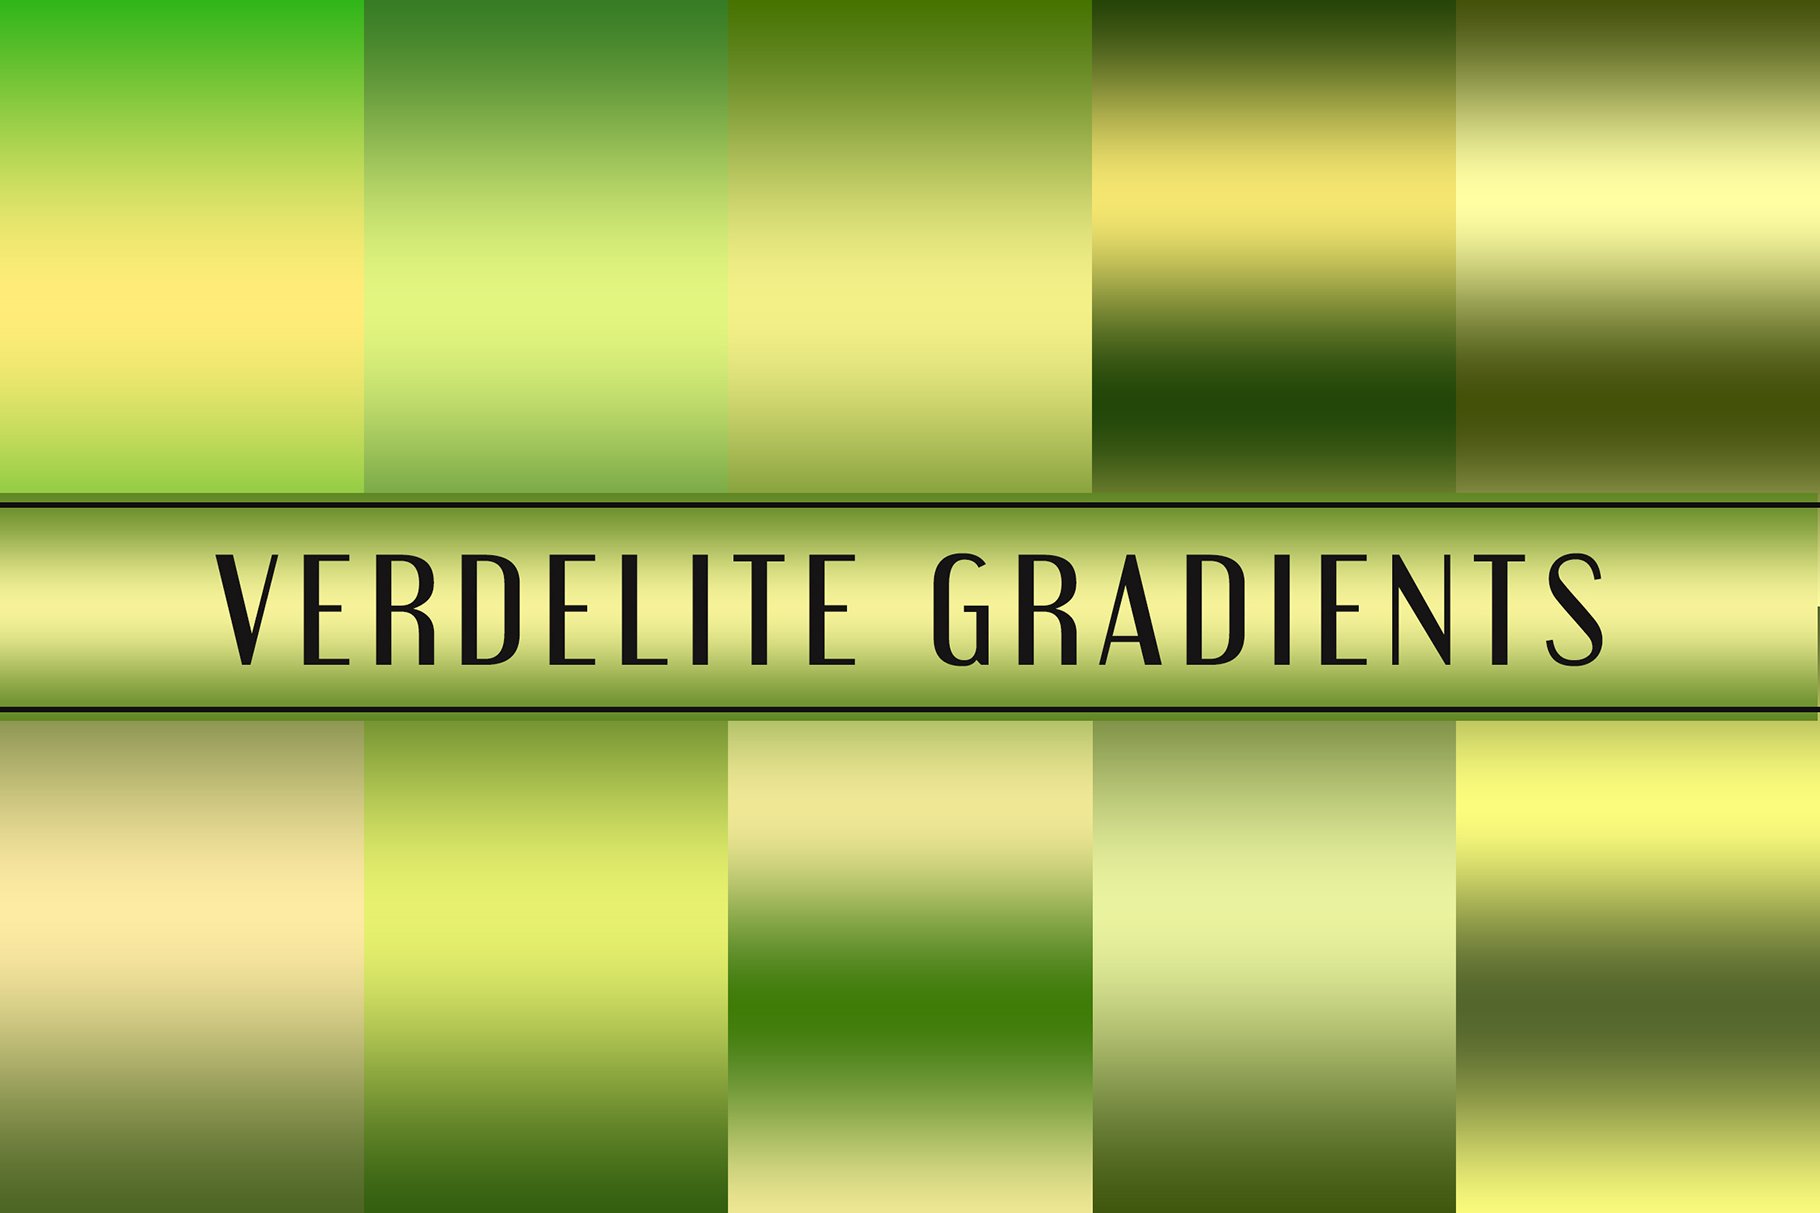 Verdelite Gradients cover image.